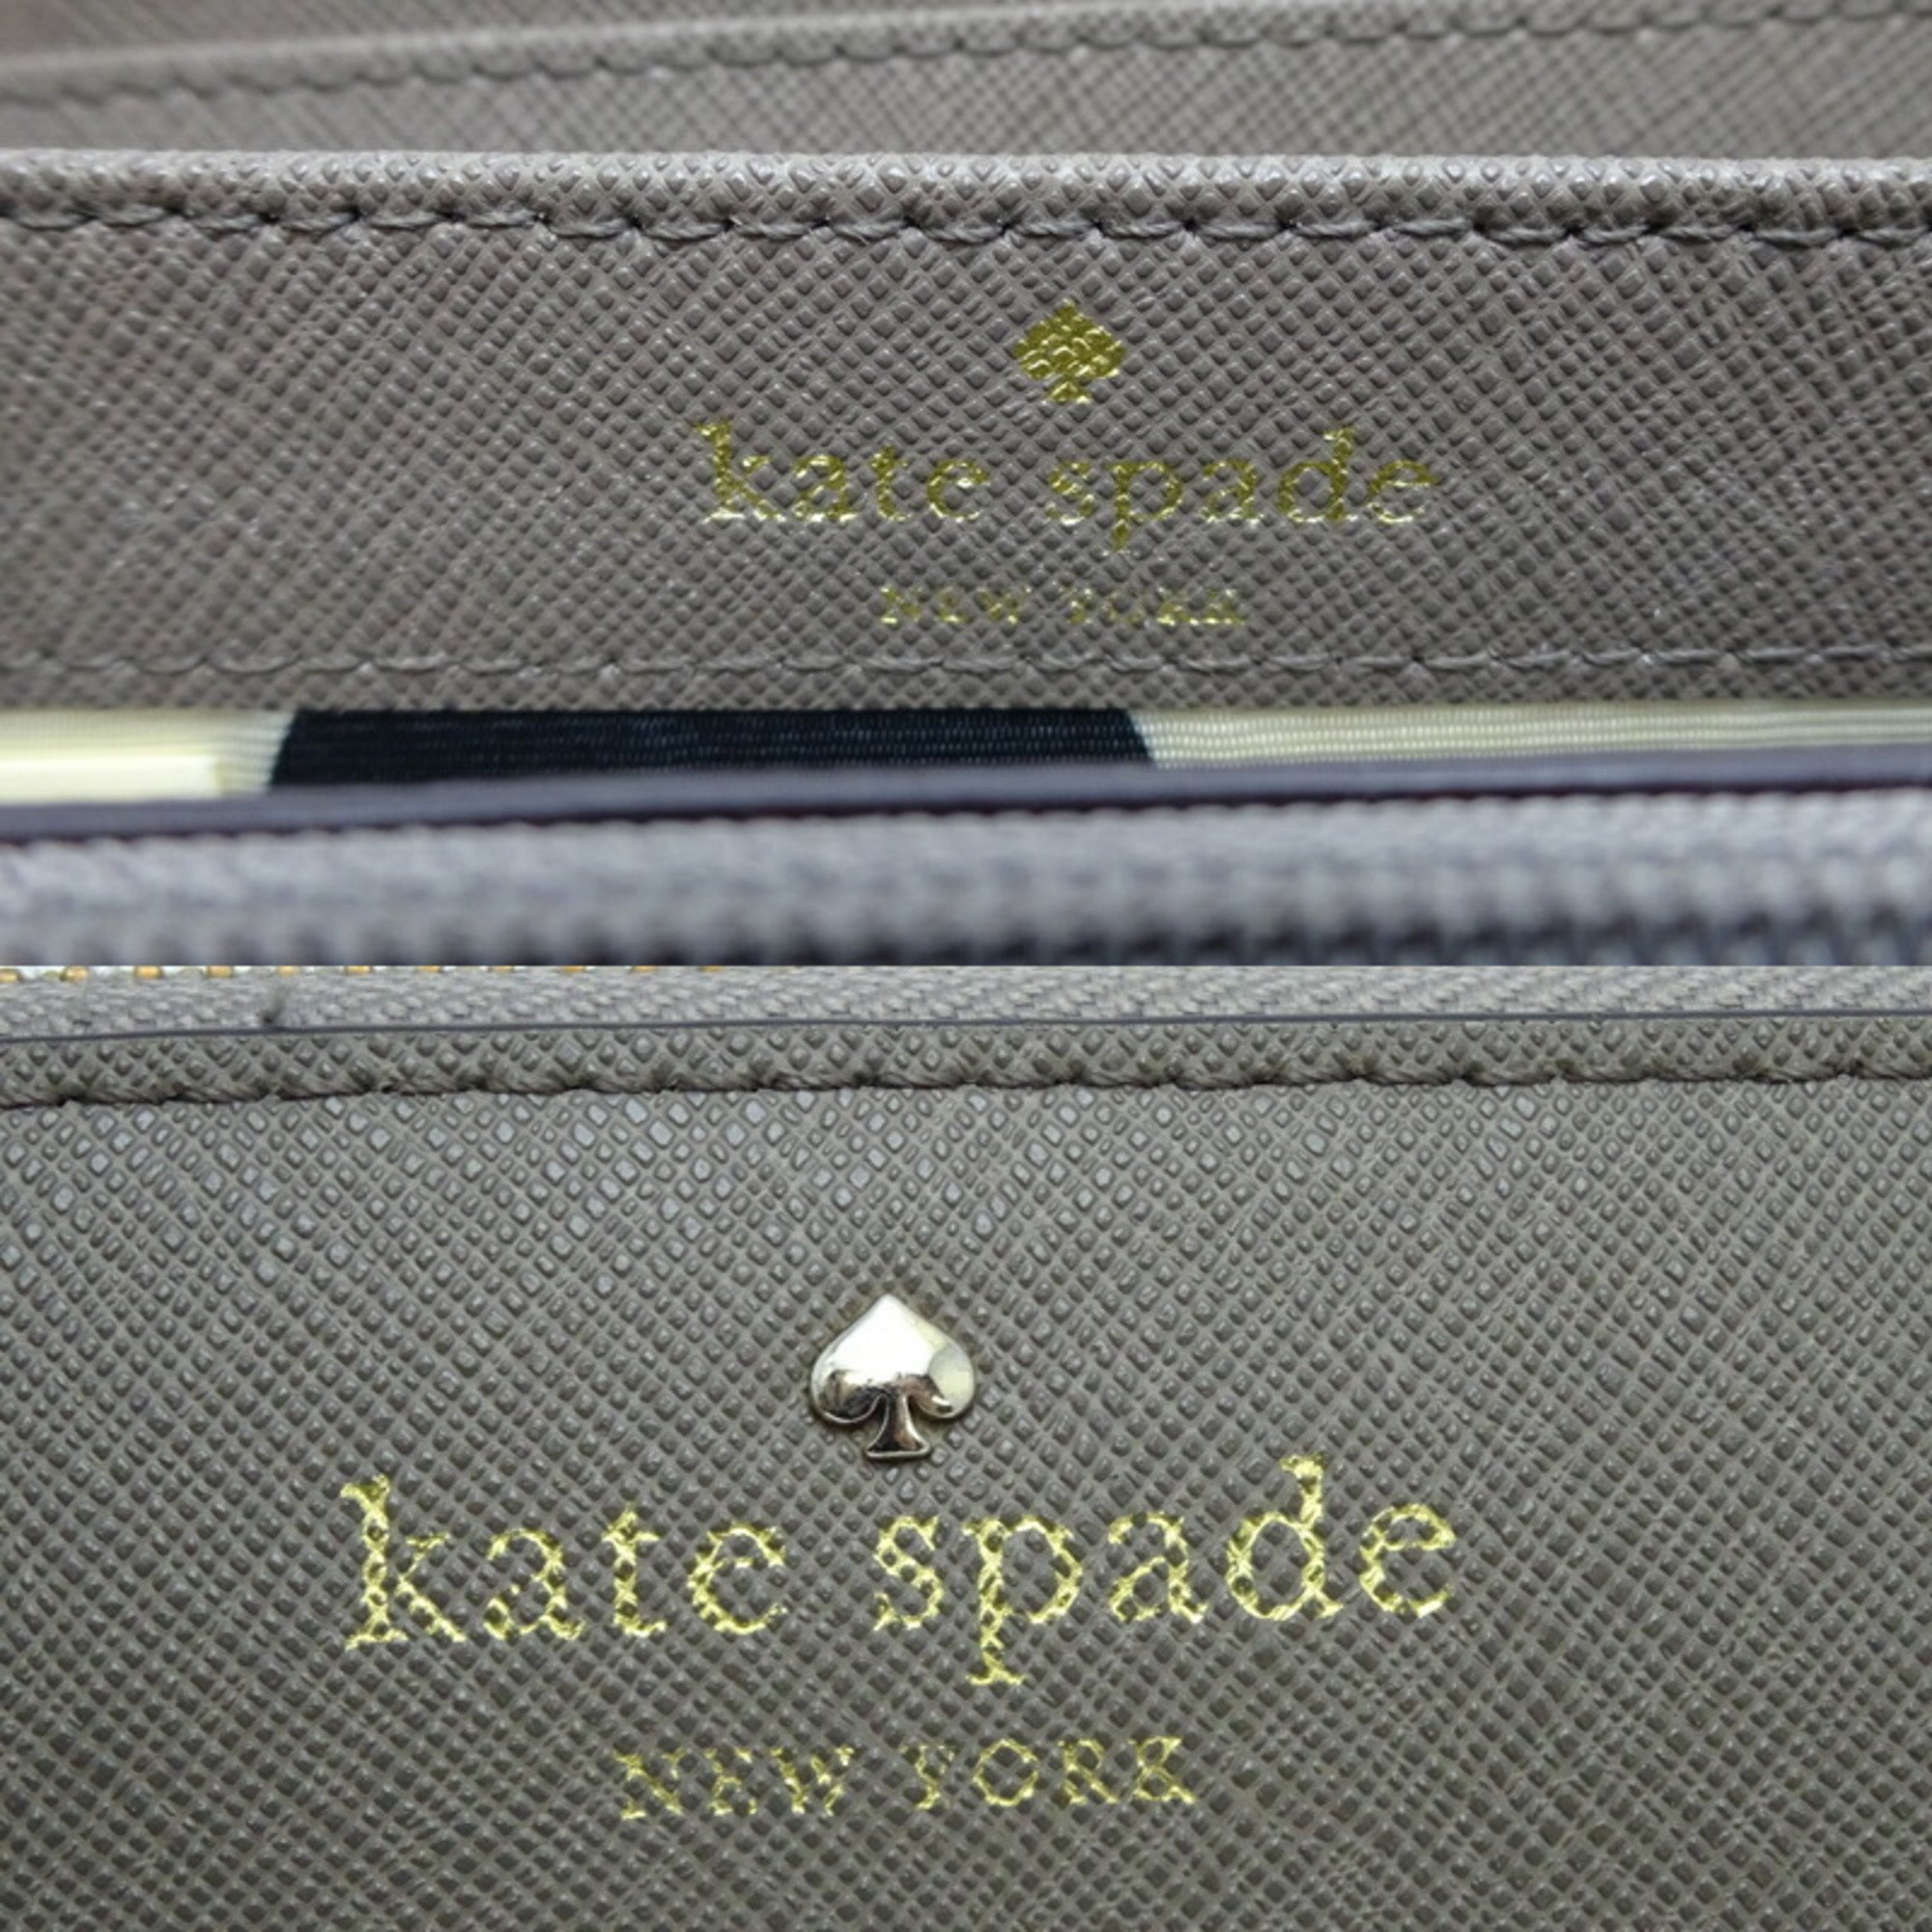 Kate Spade Round Zipper Long Wallet Women's Leather Gray